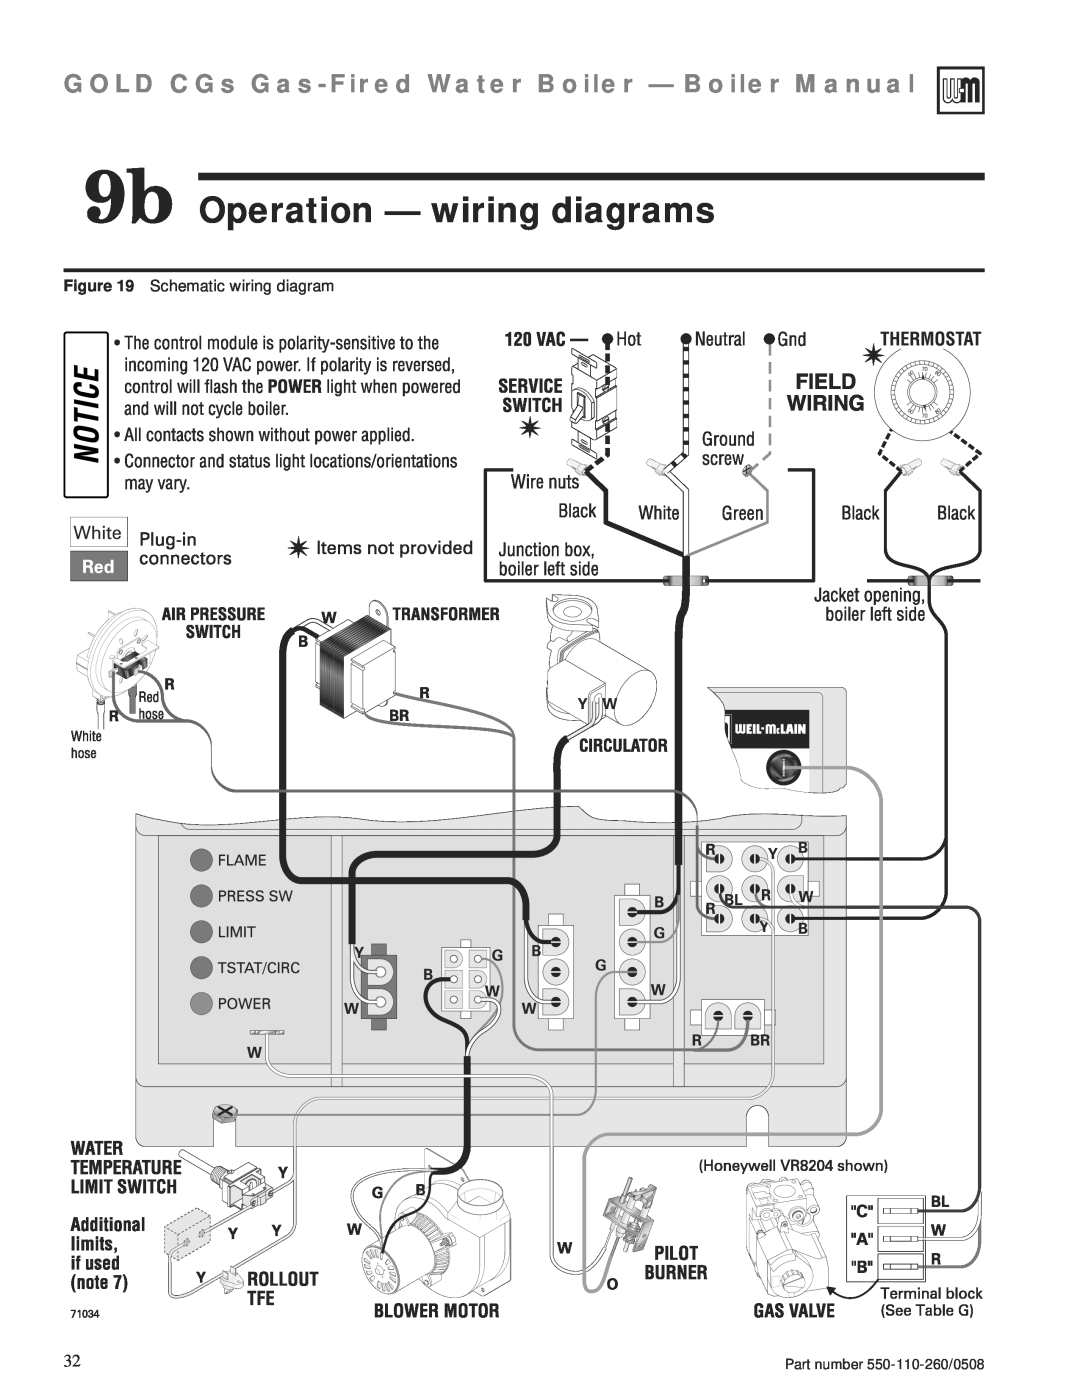 Weil-McLain 550-110-260/0508 manual 9b Operation - wiring diagrams, GOLD CGs Gas-FiredWater Boiler — Boiler Manual 